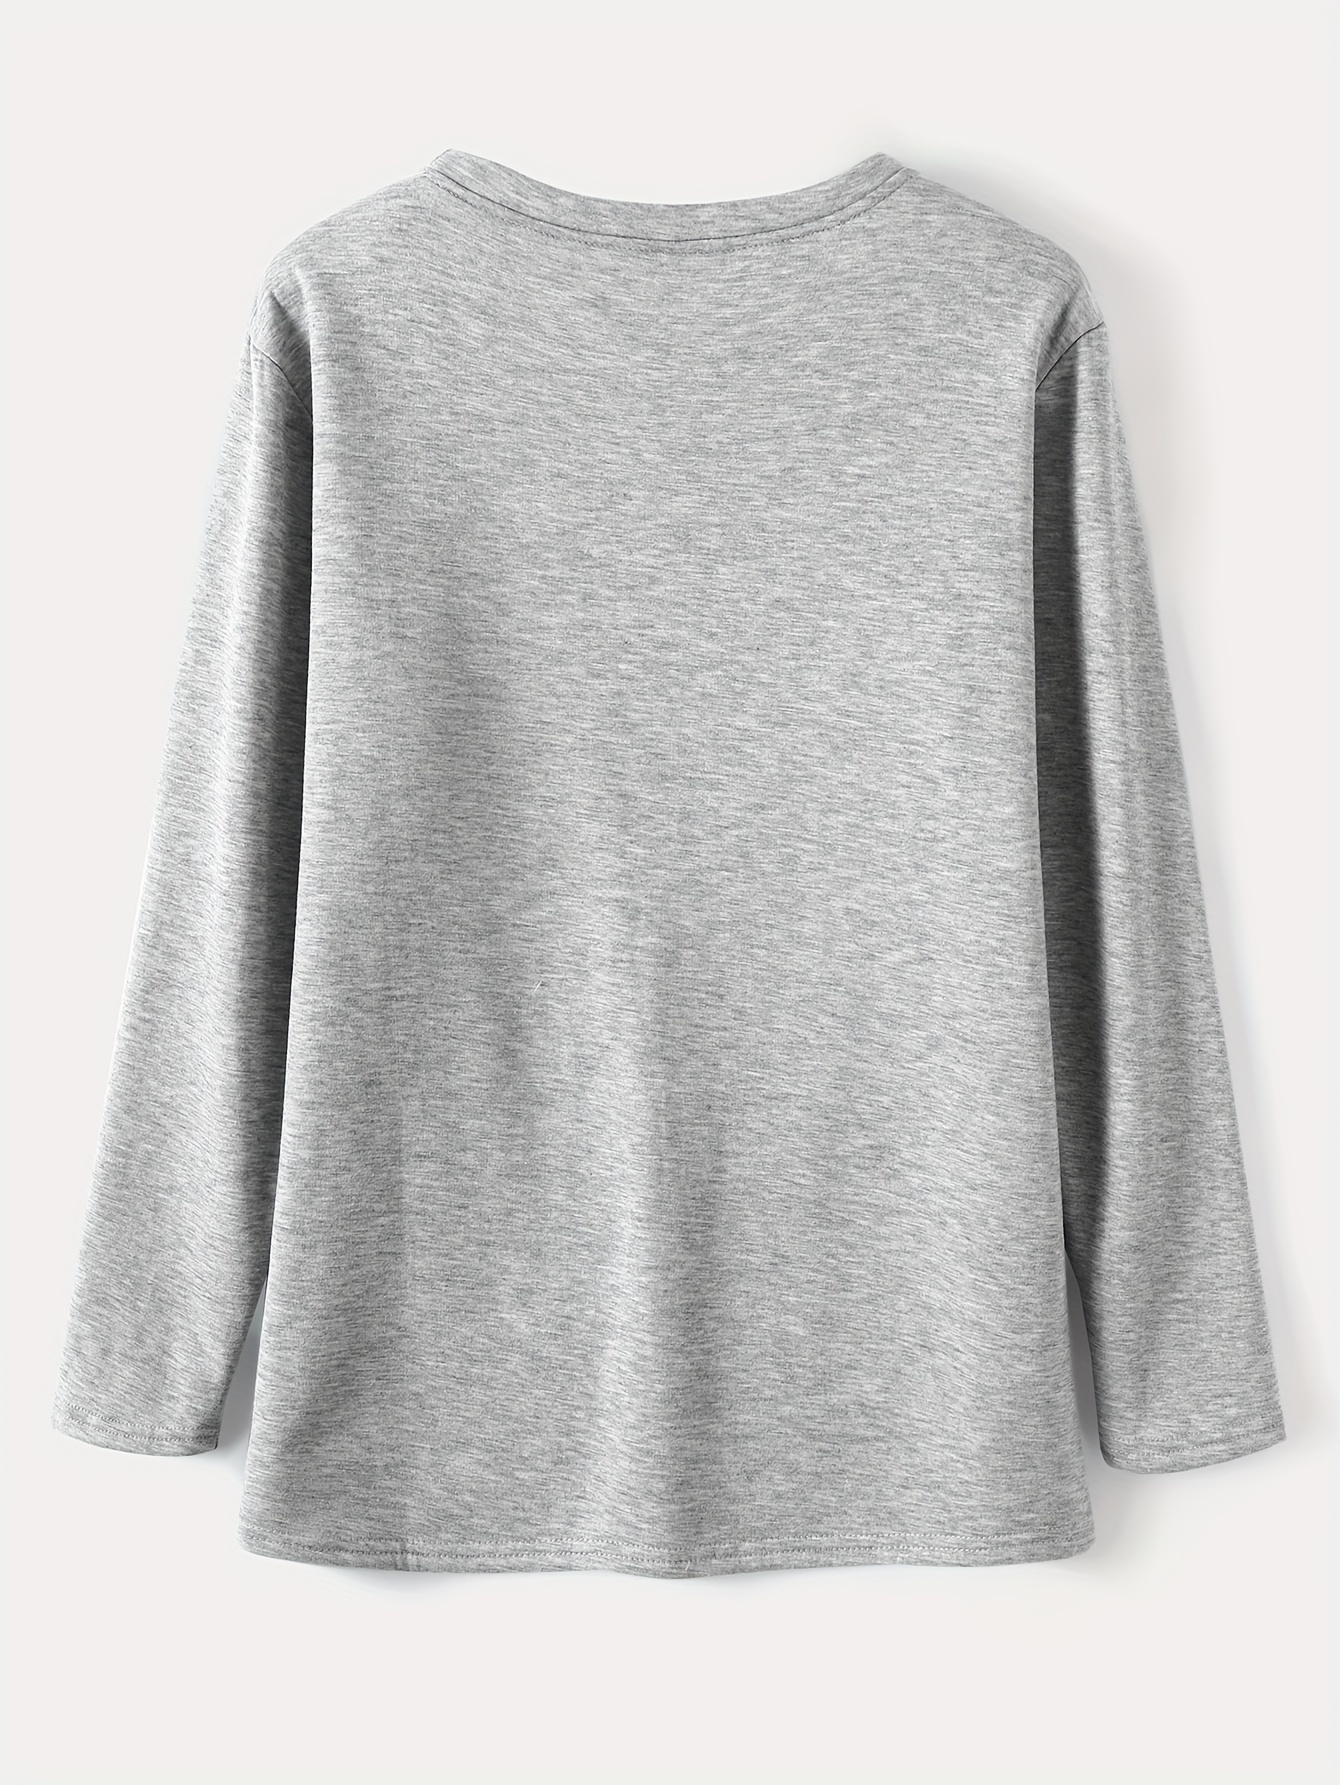 womens pullover winter warm plush lining long sleeve sweatshirt slim fit warm top womens clothing details 16